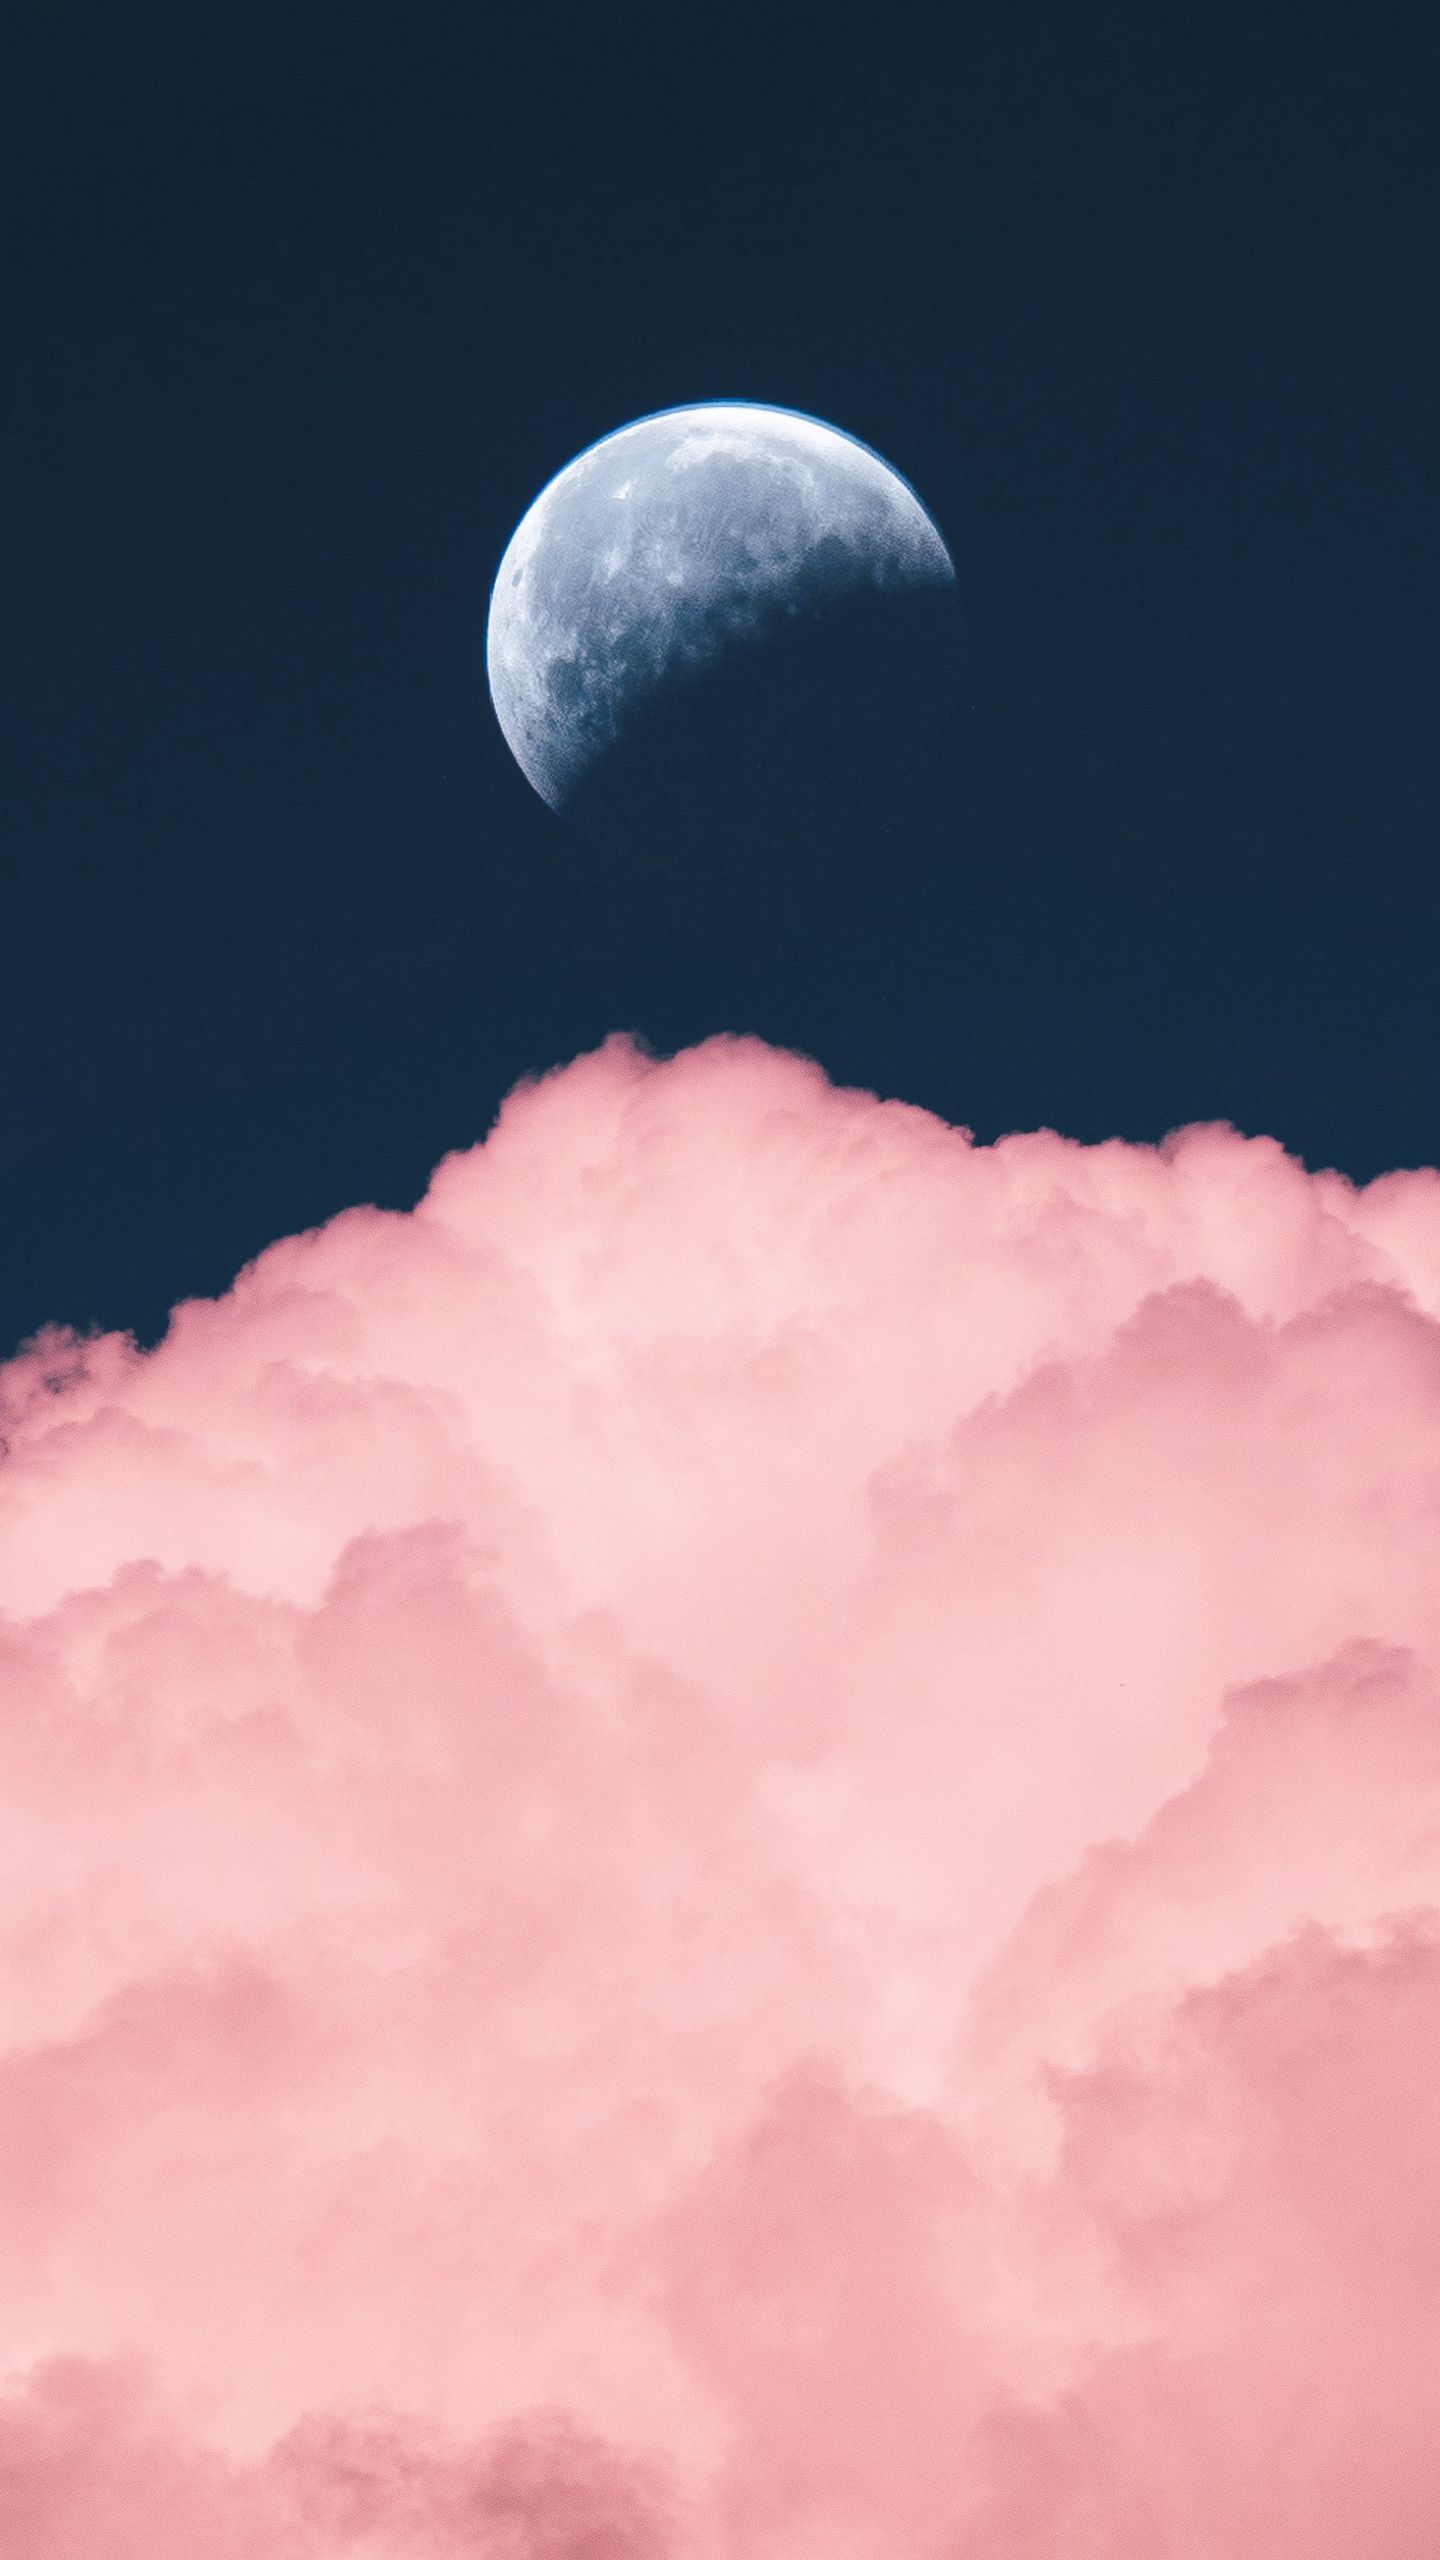 Download wallpaper 1440x2560 sky, moon, cloud, pink qhd samsung galaxy s s edge, note, lg g4 HD background